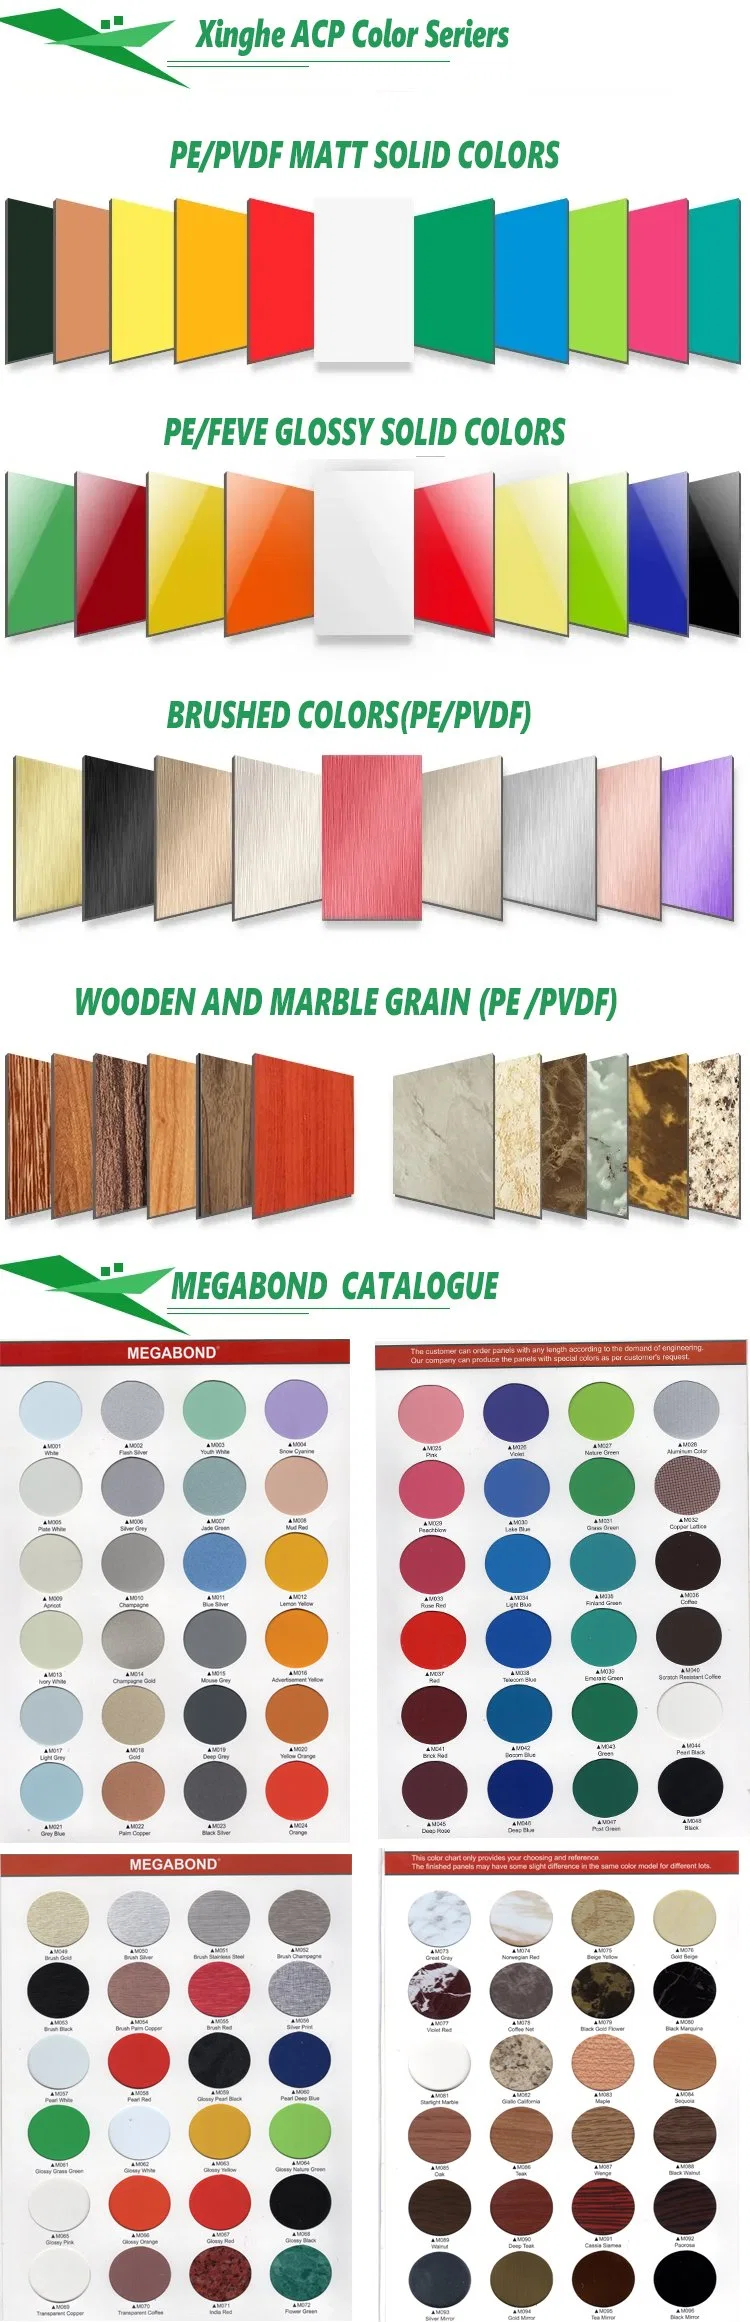 Curtain Wall Projects Copper Lattice UV-Resistant Alucobond Sheet Flexible Natural Diverse Colors Aluminum Composite Panels